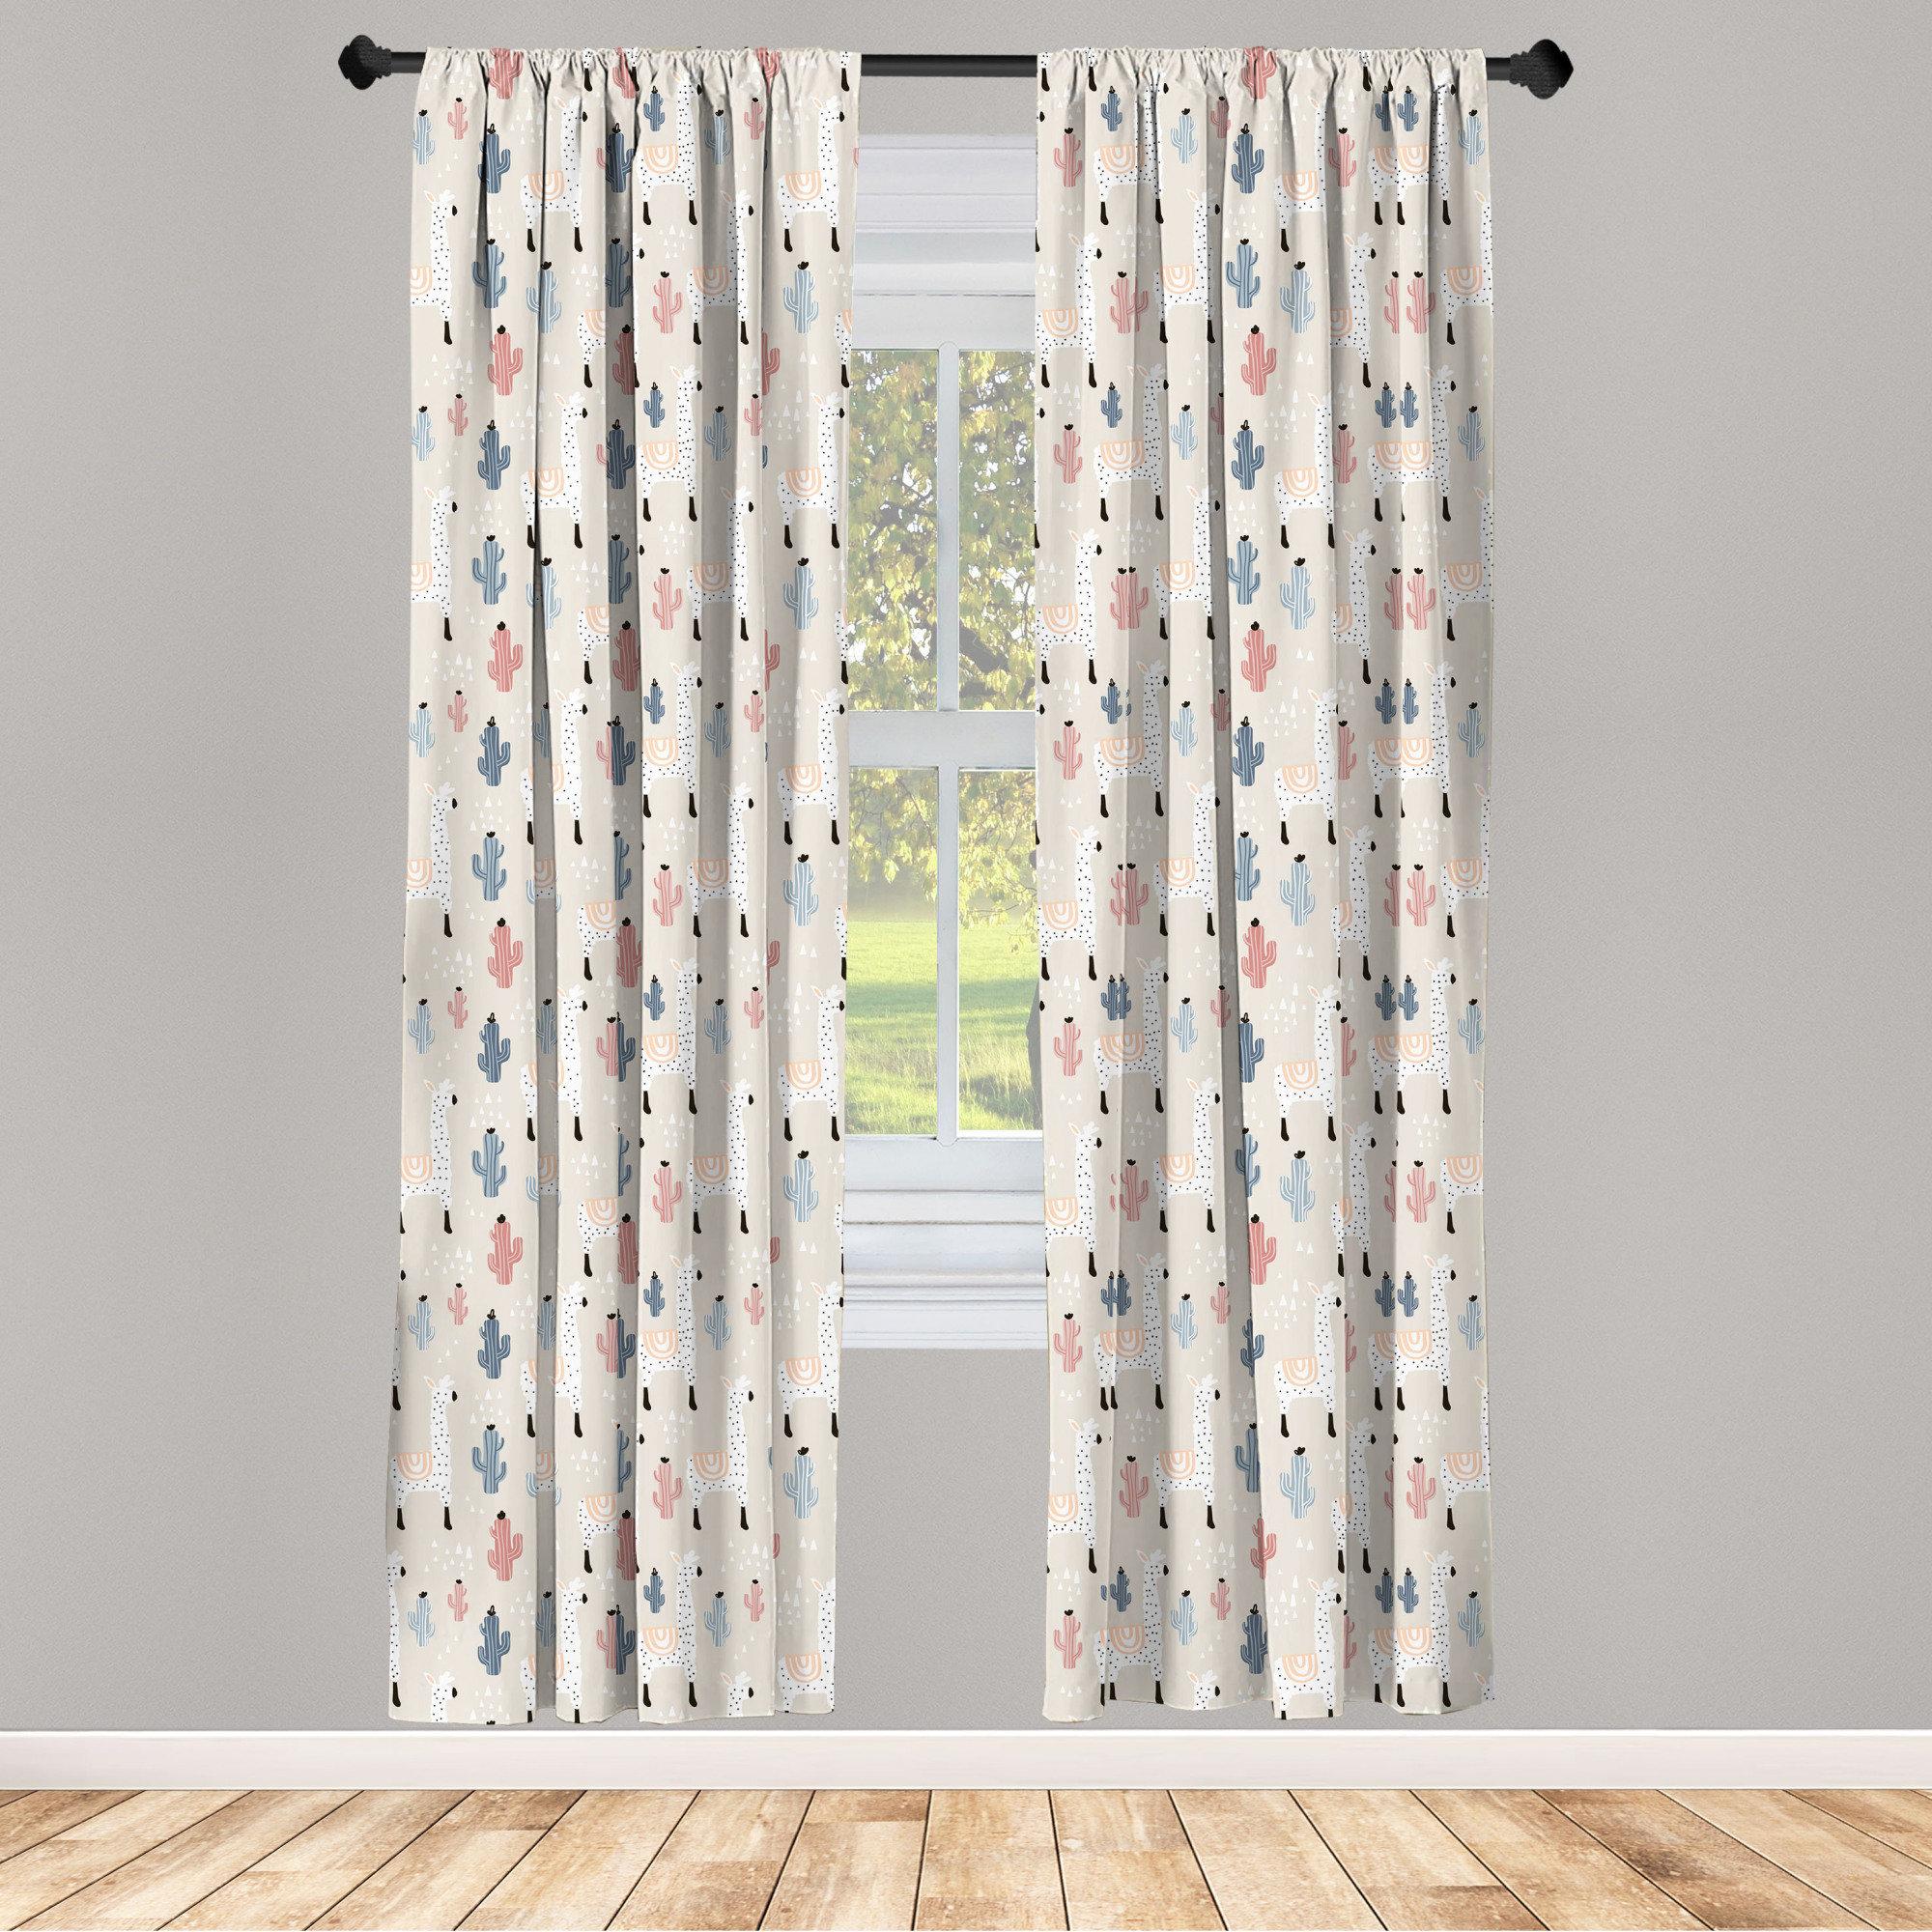 Llama Curtains 2 Panel Set for Decor 5 Sizes Available Window Drapes 